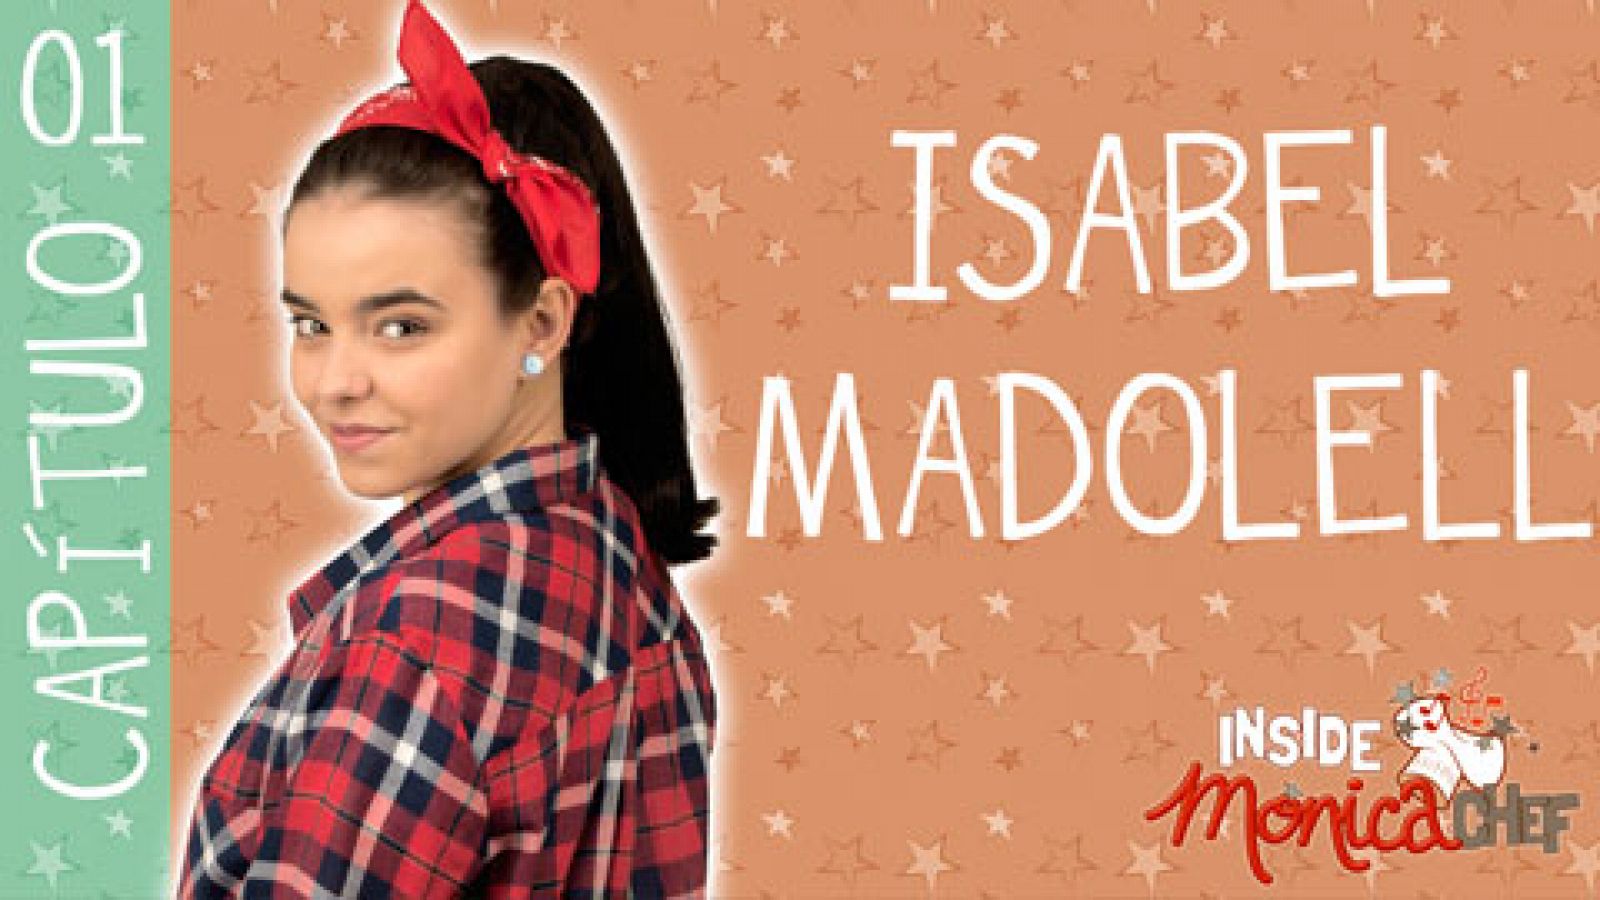 Sin programa: Inside Mónica Chef 1 - Isabel madolell | RTVE Play